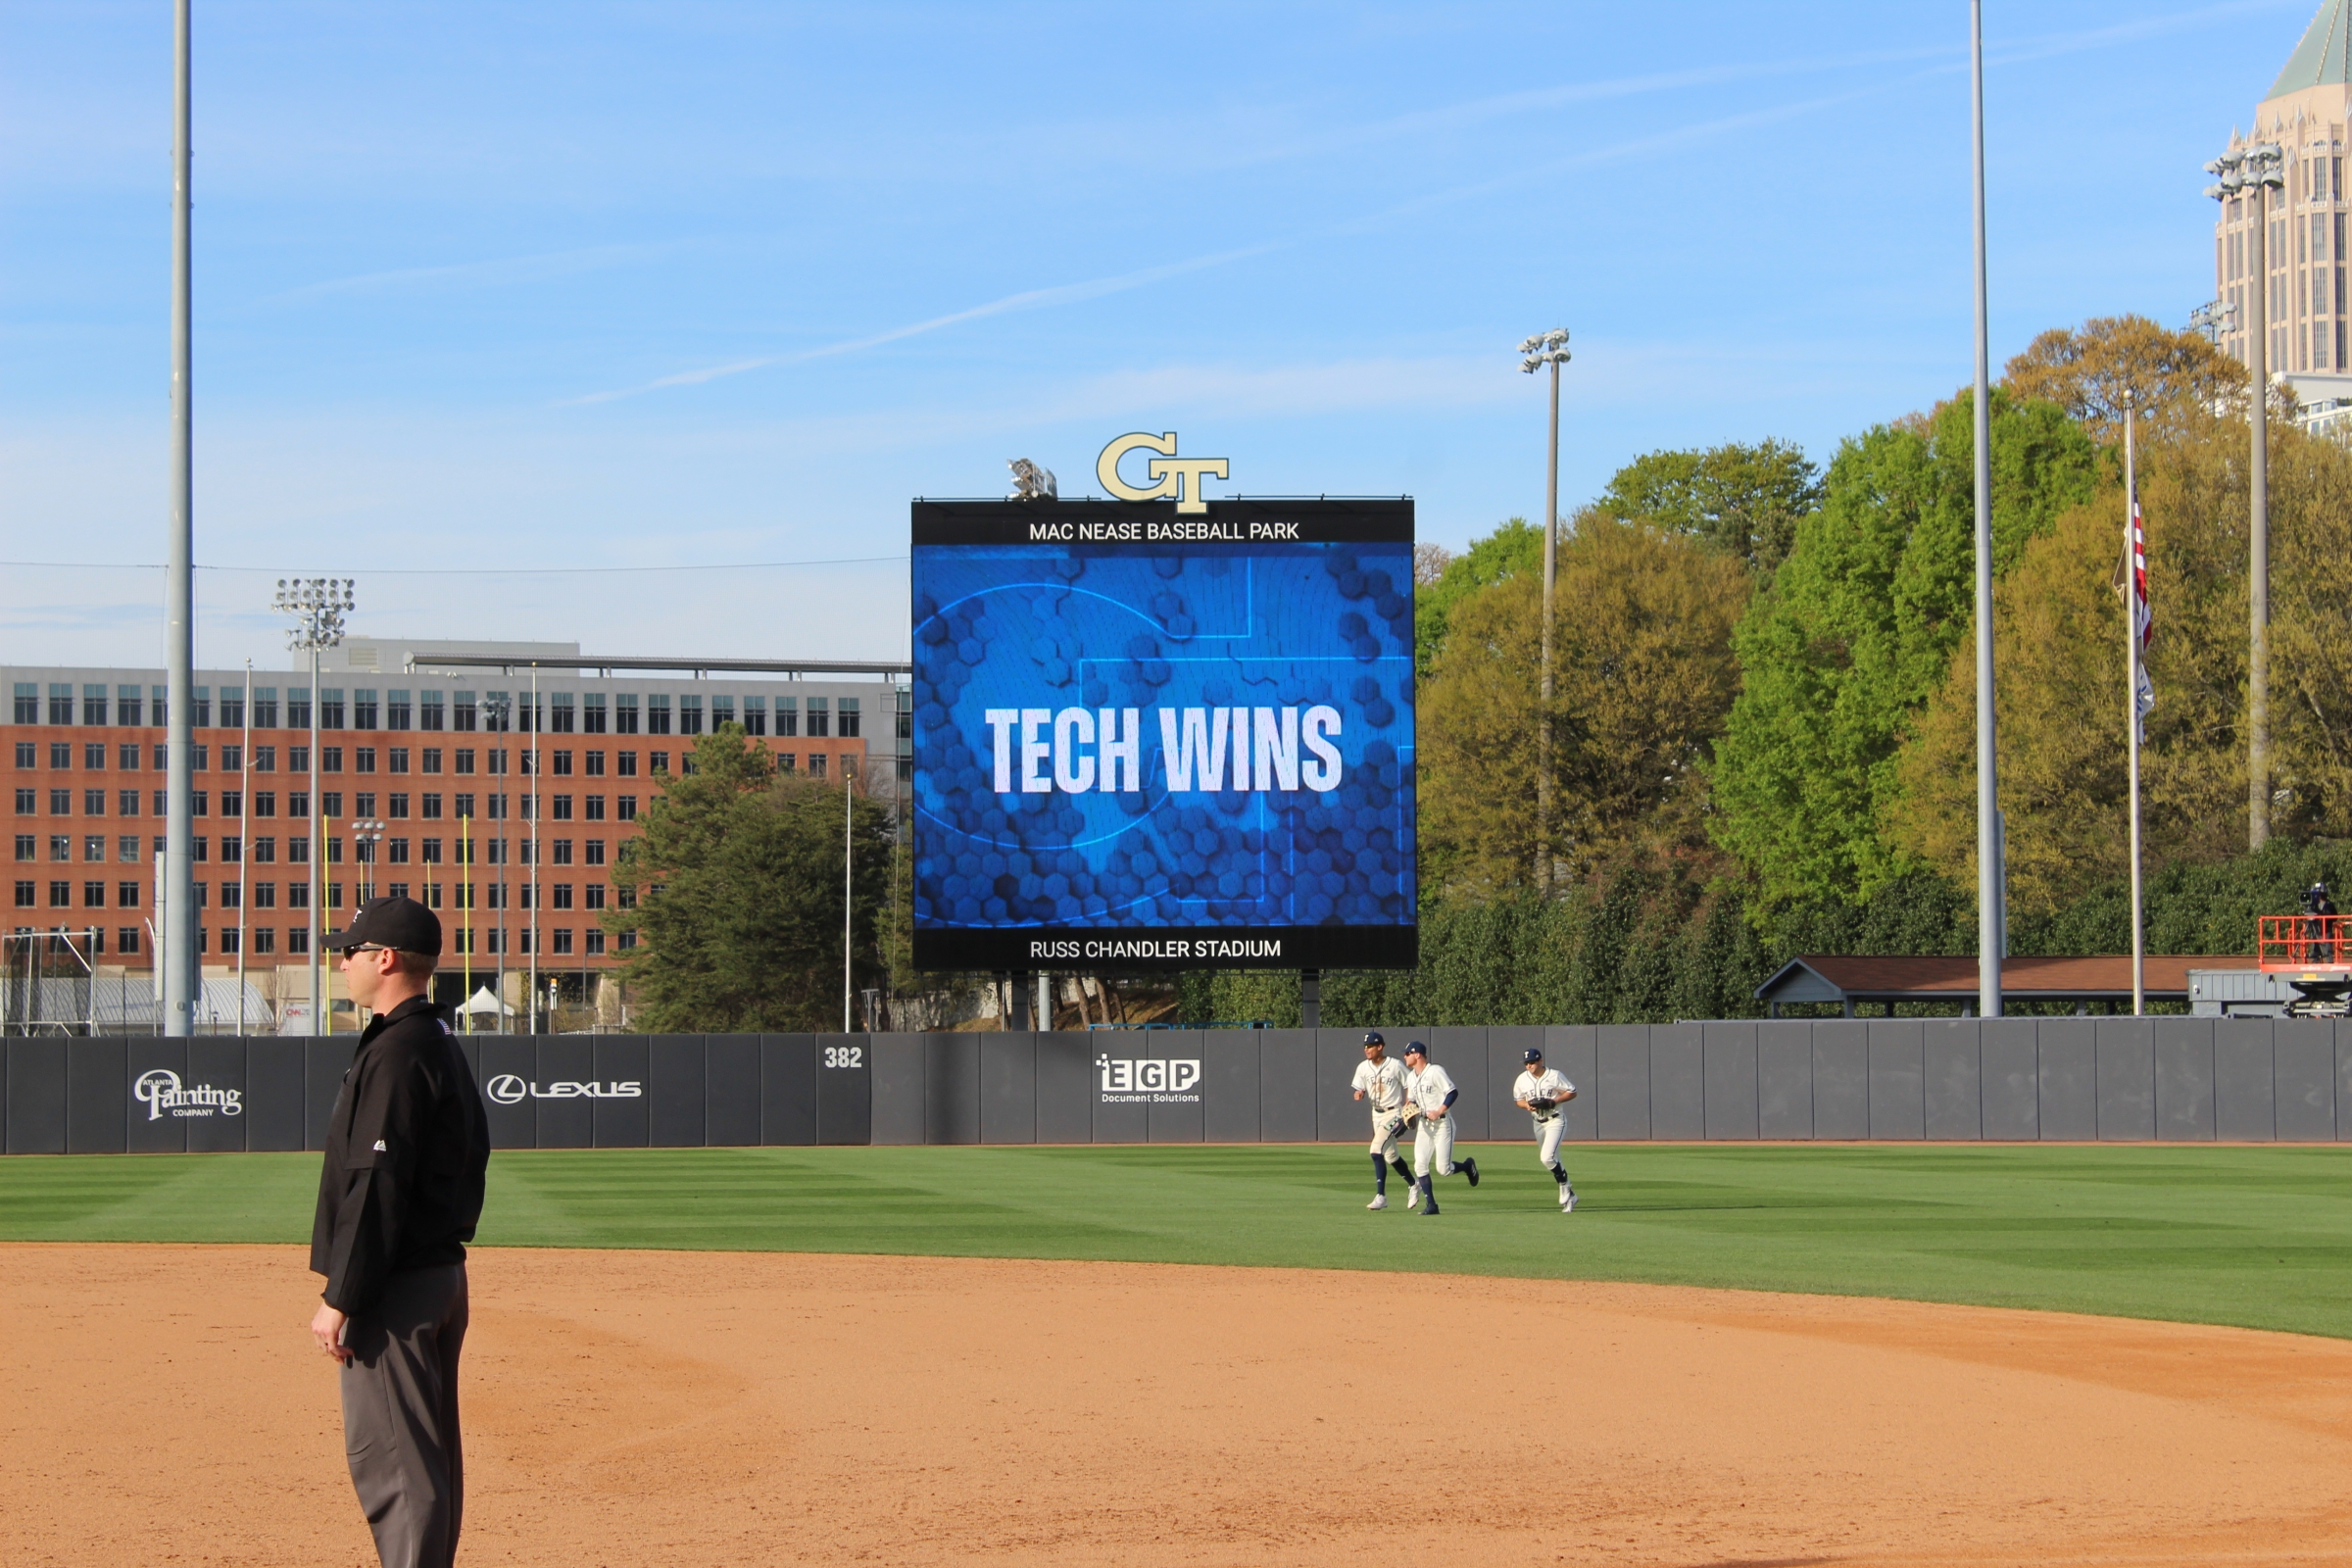 An LED sign on a baseball field reads "TECH WINS"